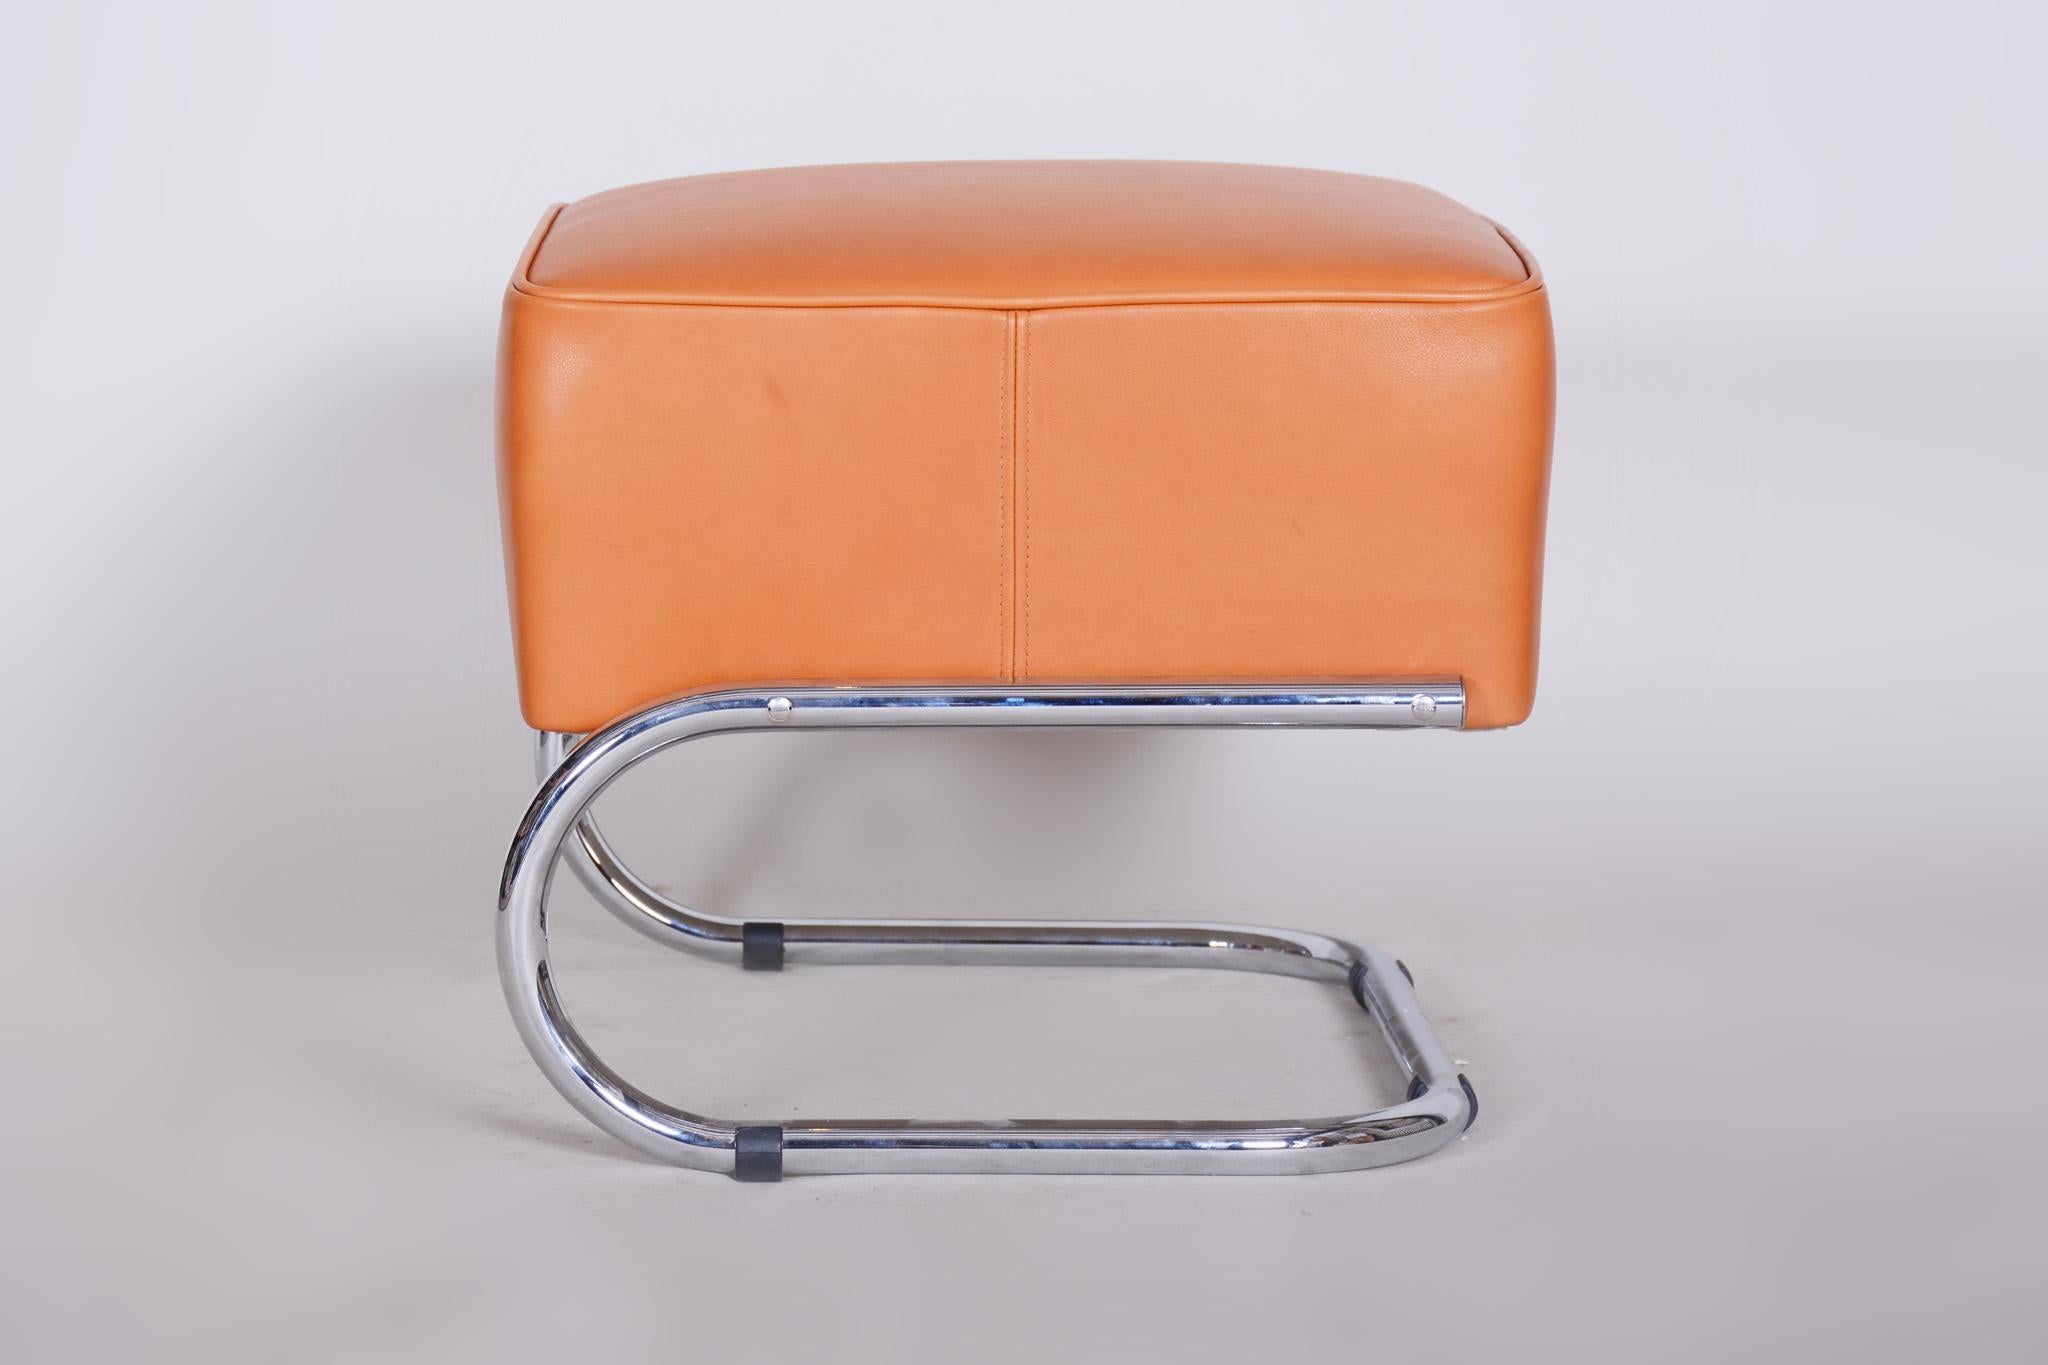 Czech Modernist Tubular Stool, Orange Leather, Chrome-Plated Steel, Slezák, 1930s For Sale